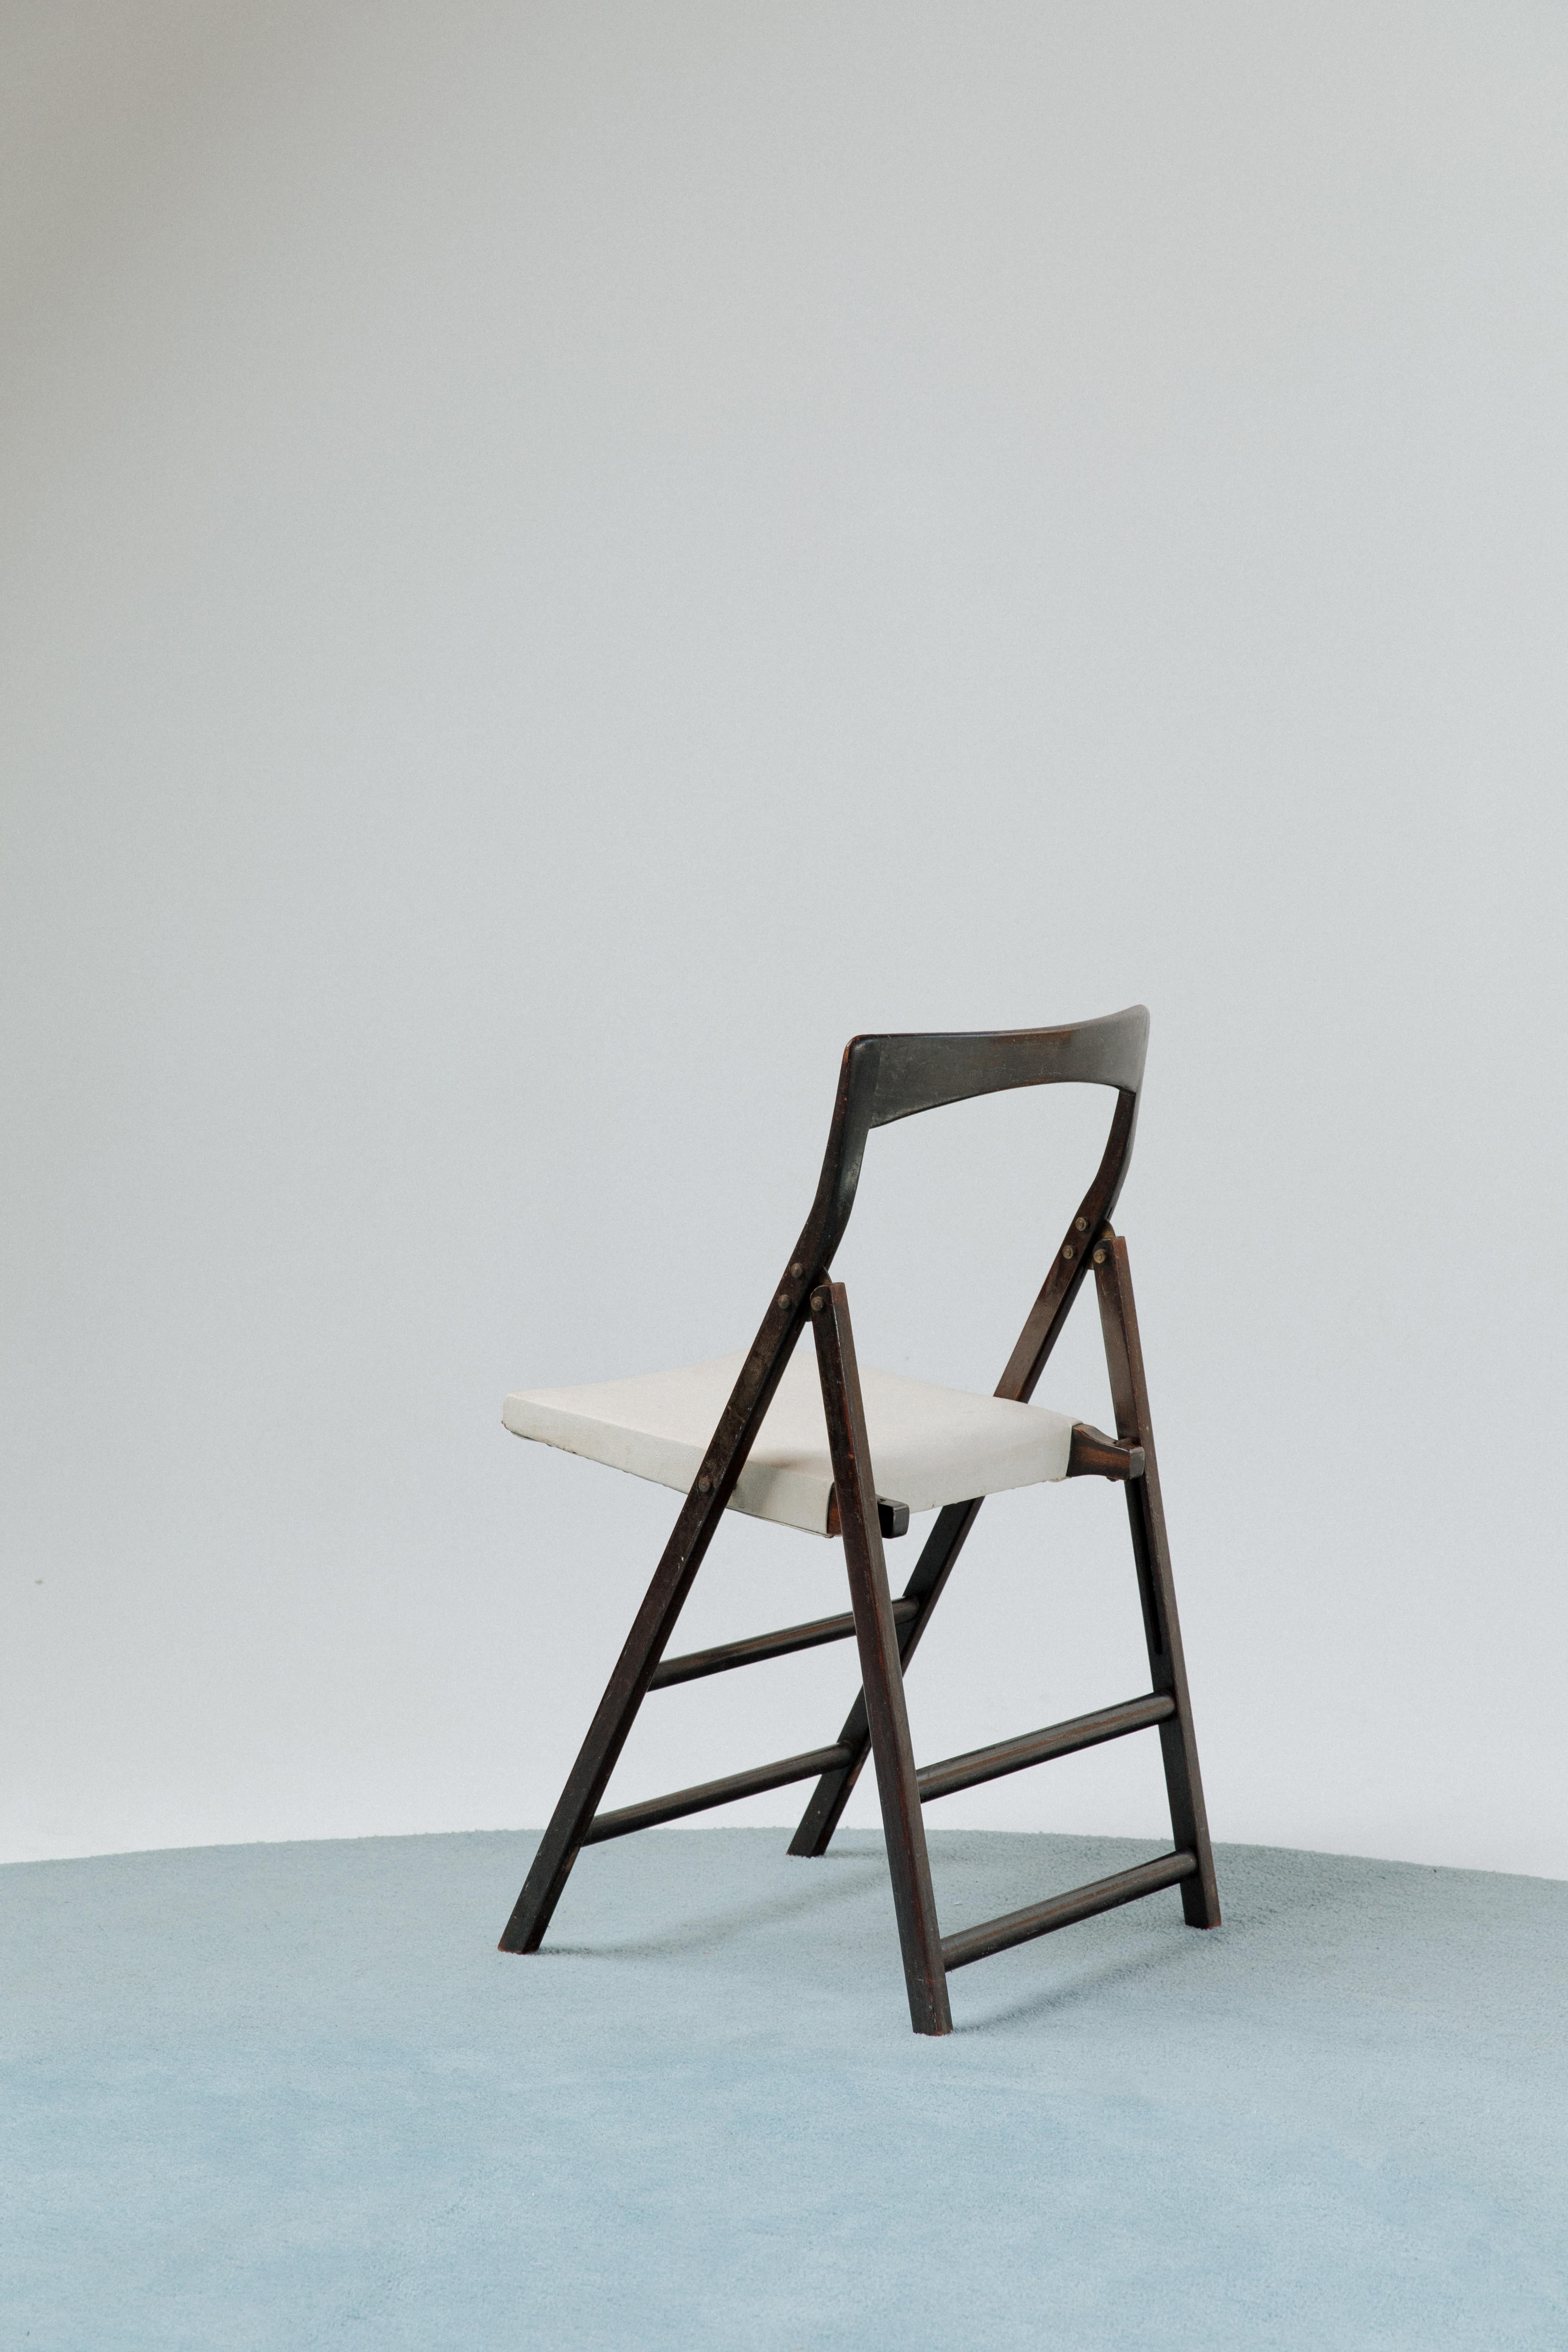 Brazilian Osvaldo Borsani s80 Folding Chairs For Sale